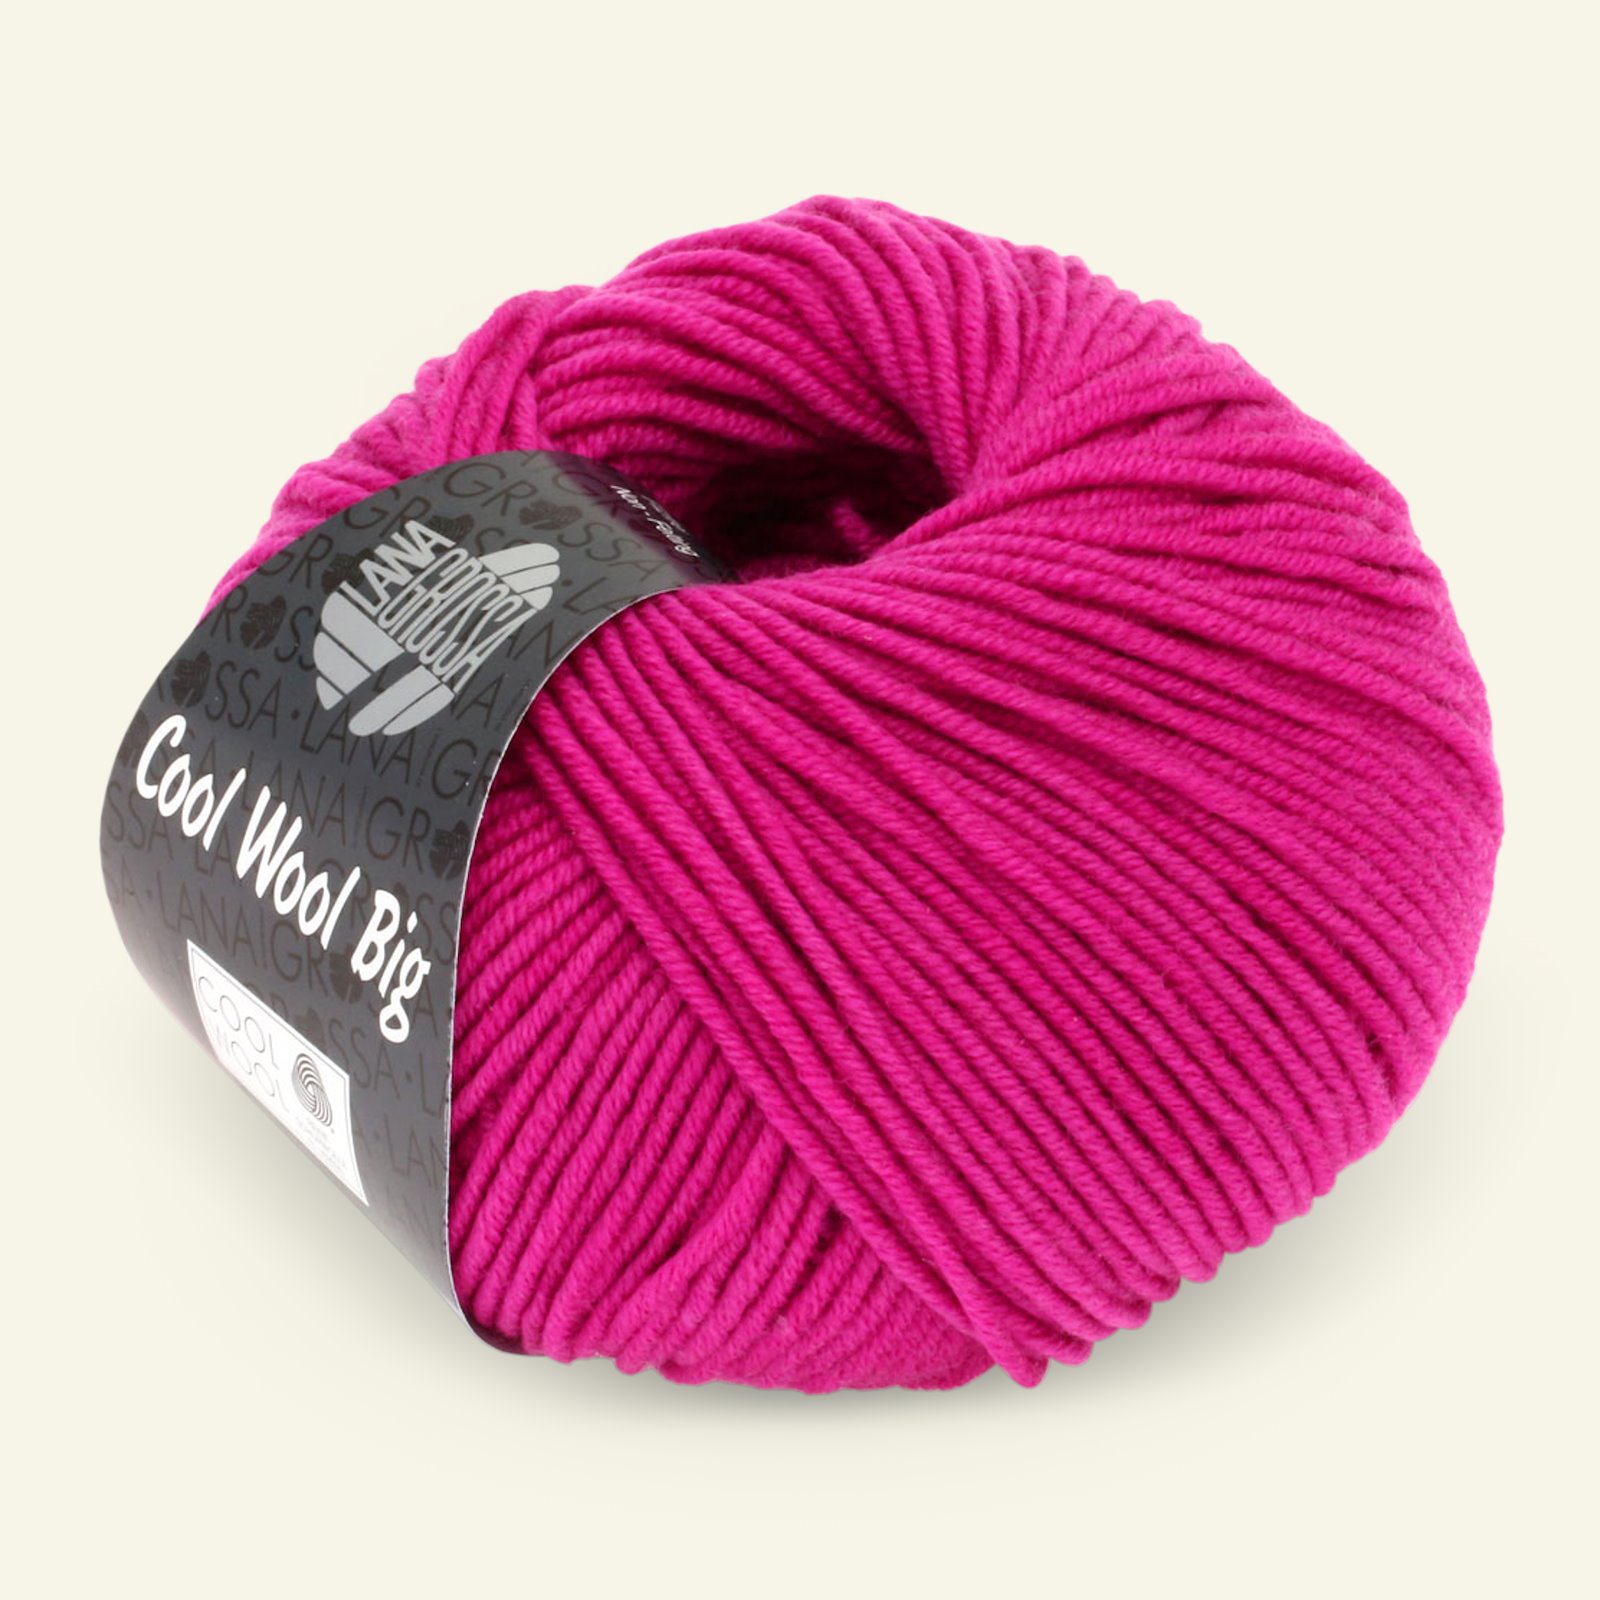 Lana Grossa, Extra feine Merinowolle Garn "Cool Wool Big", Zyklam 90001101_pack